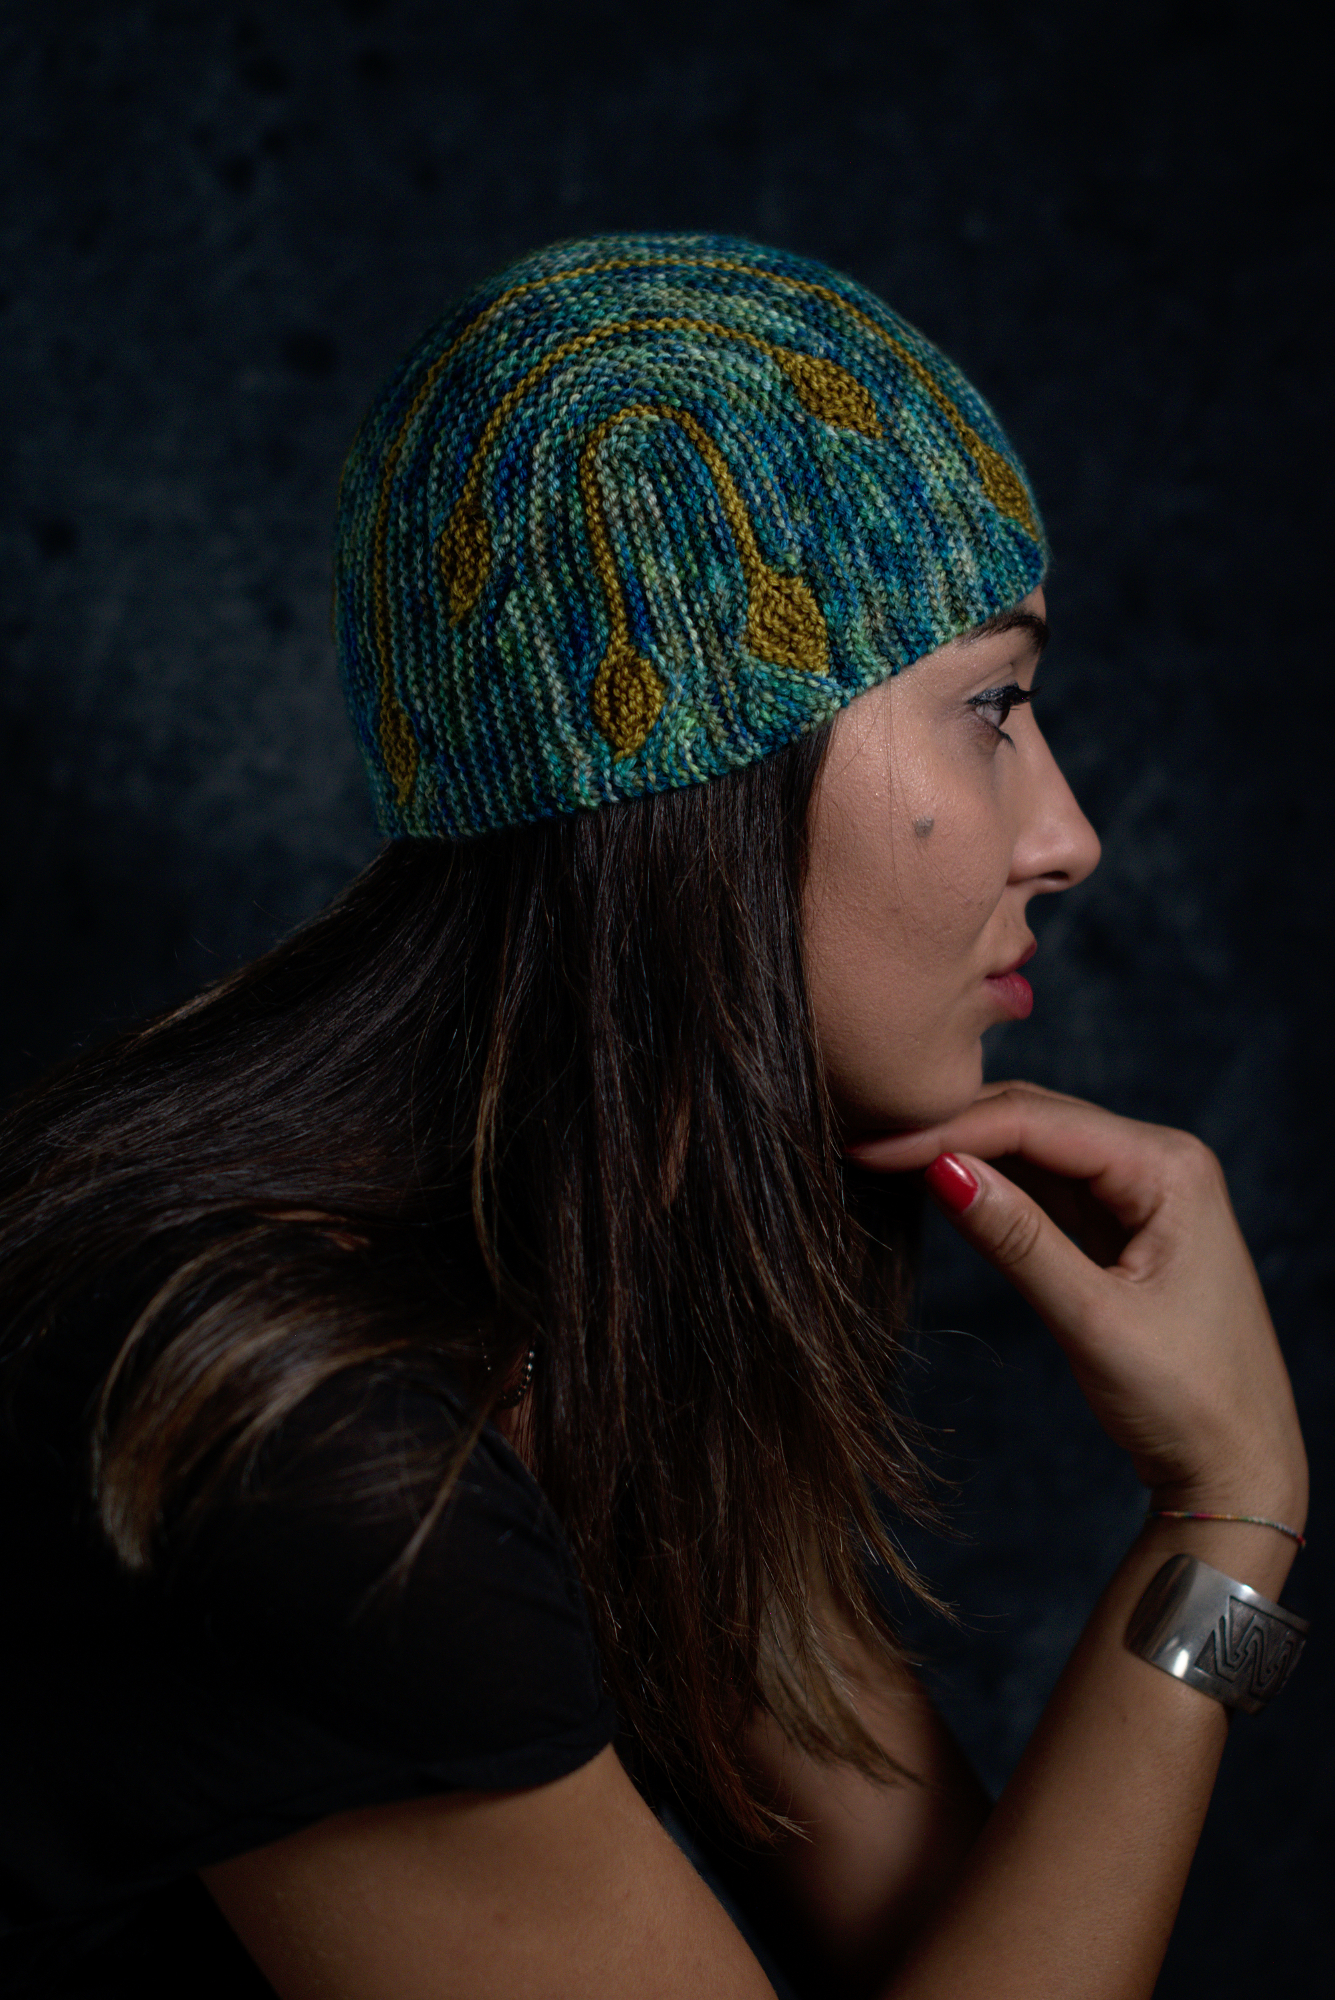 Bilateral sideways knit short row striped hat knitting pattern